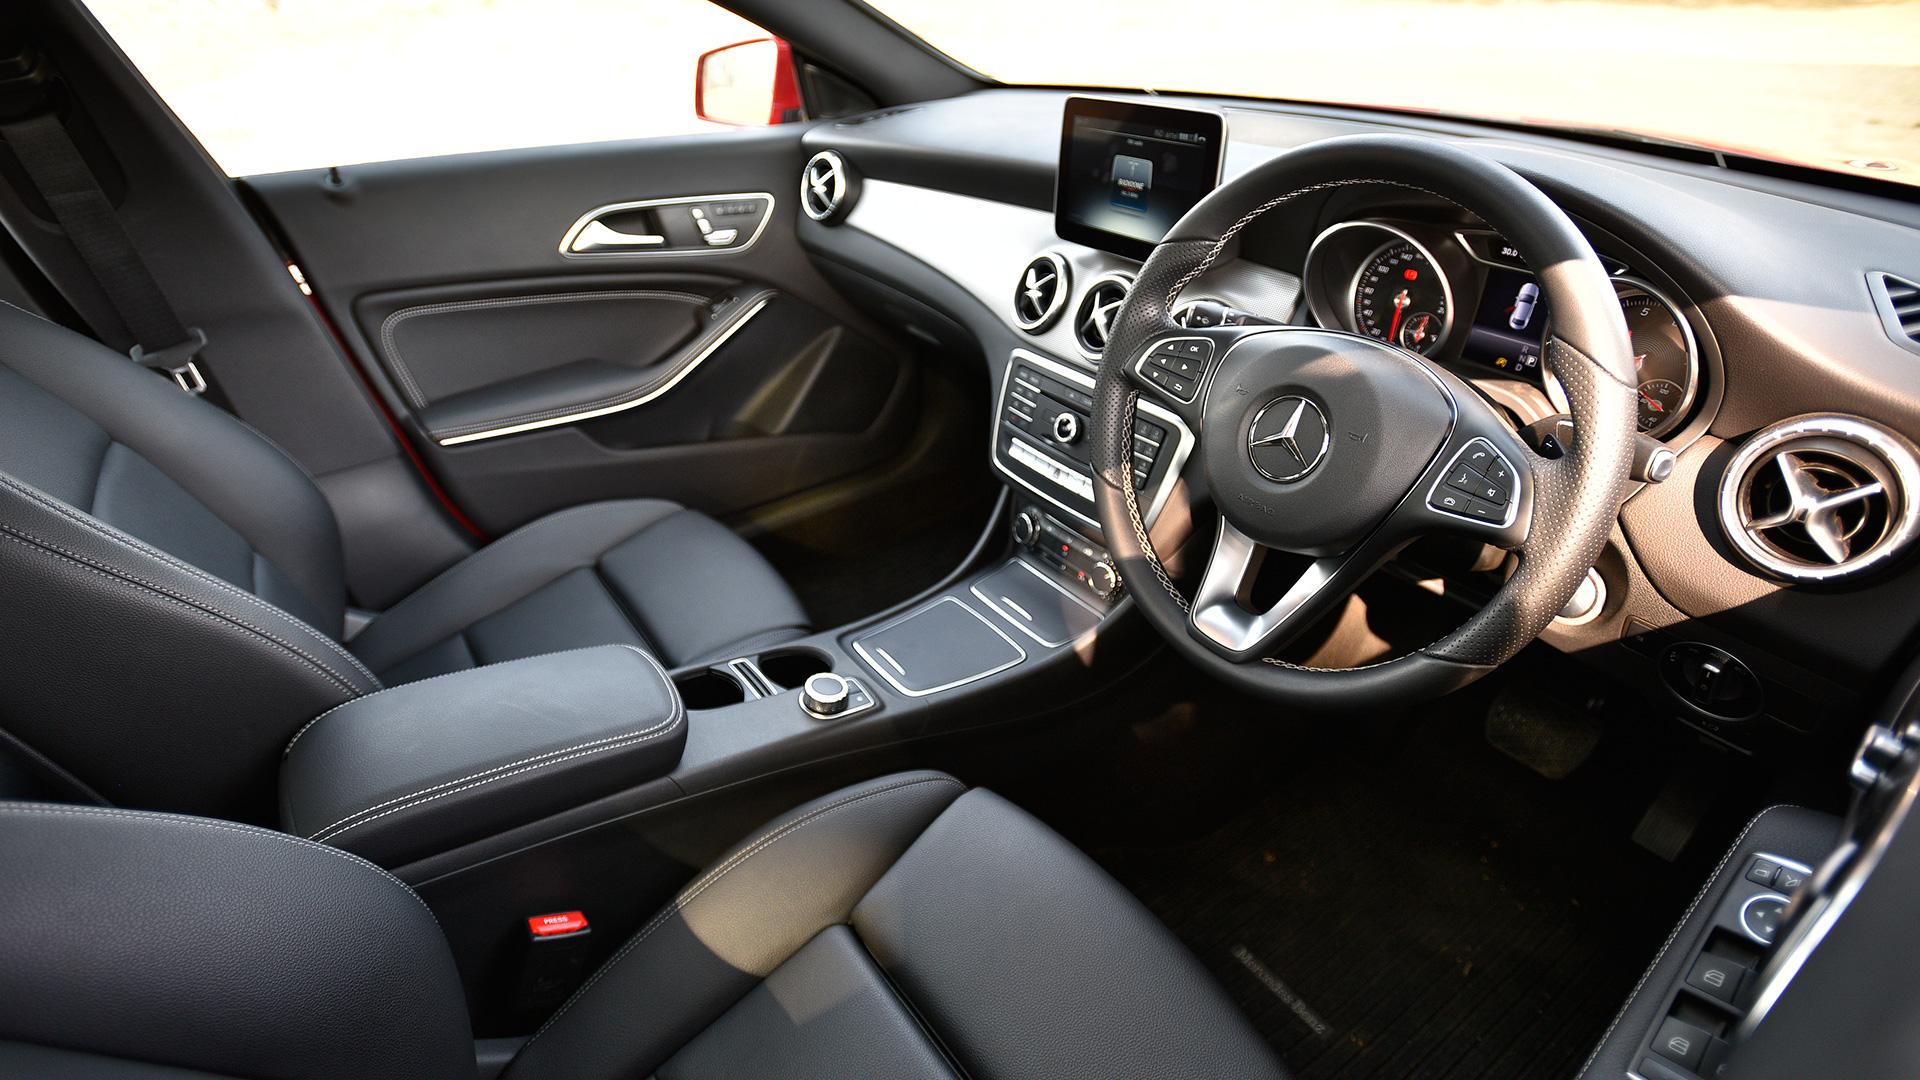 Mercedes Benz CLA 2017 200 Sport Interior